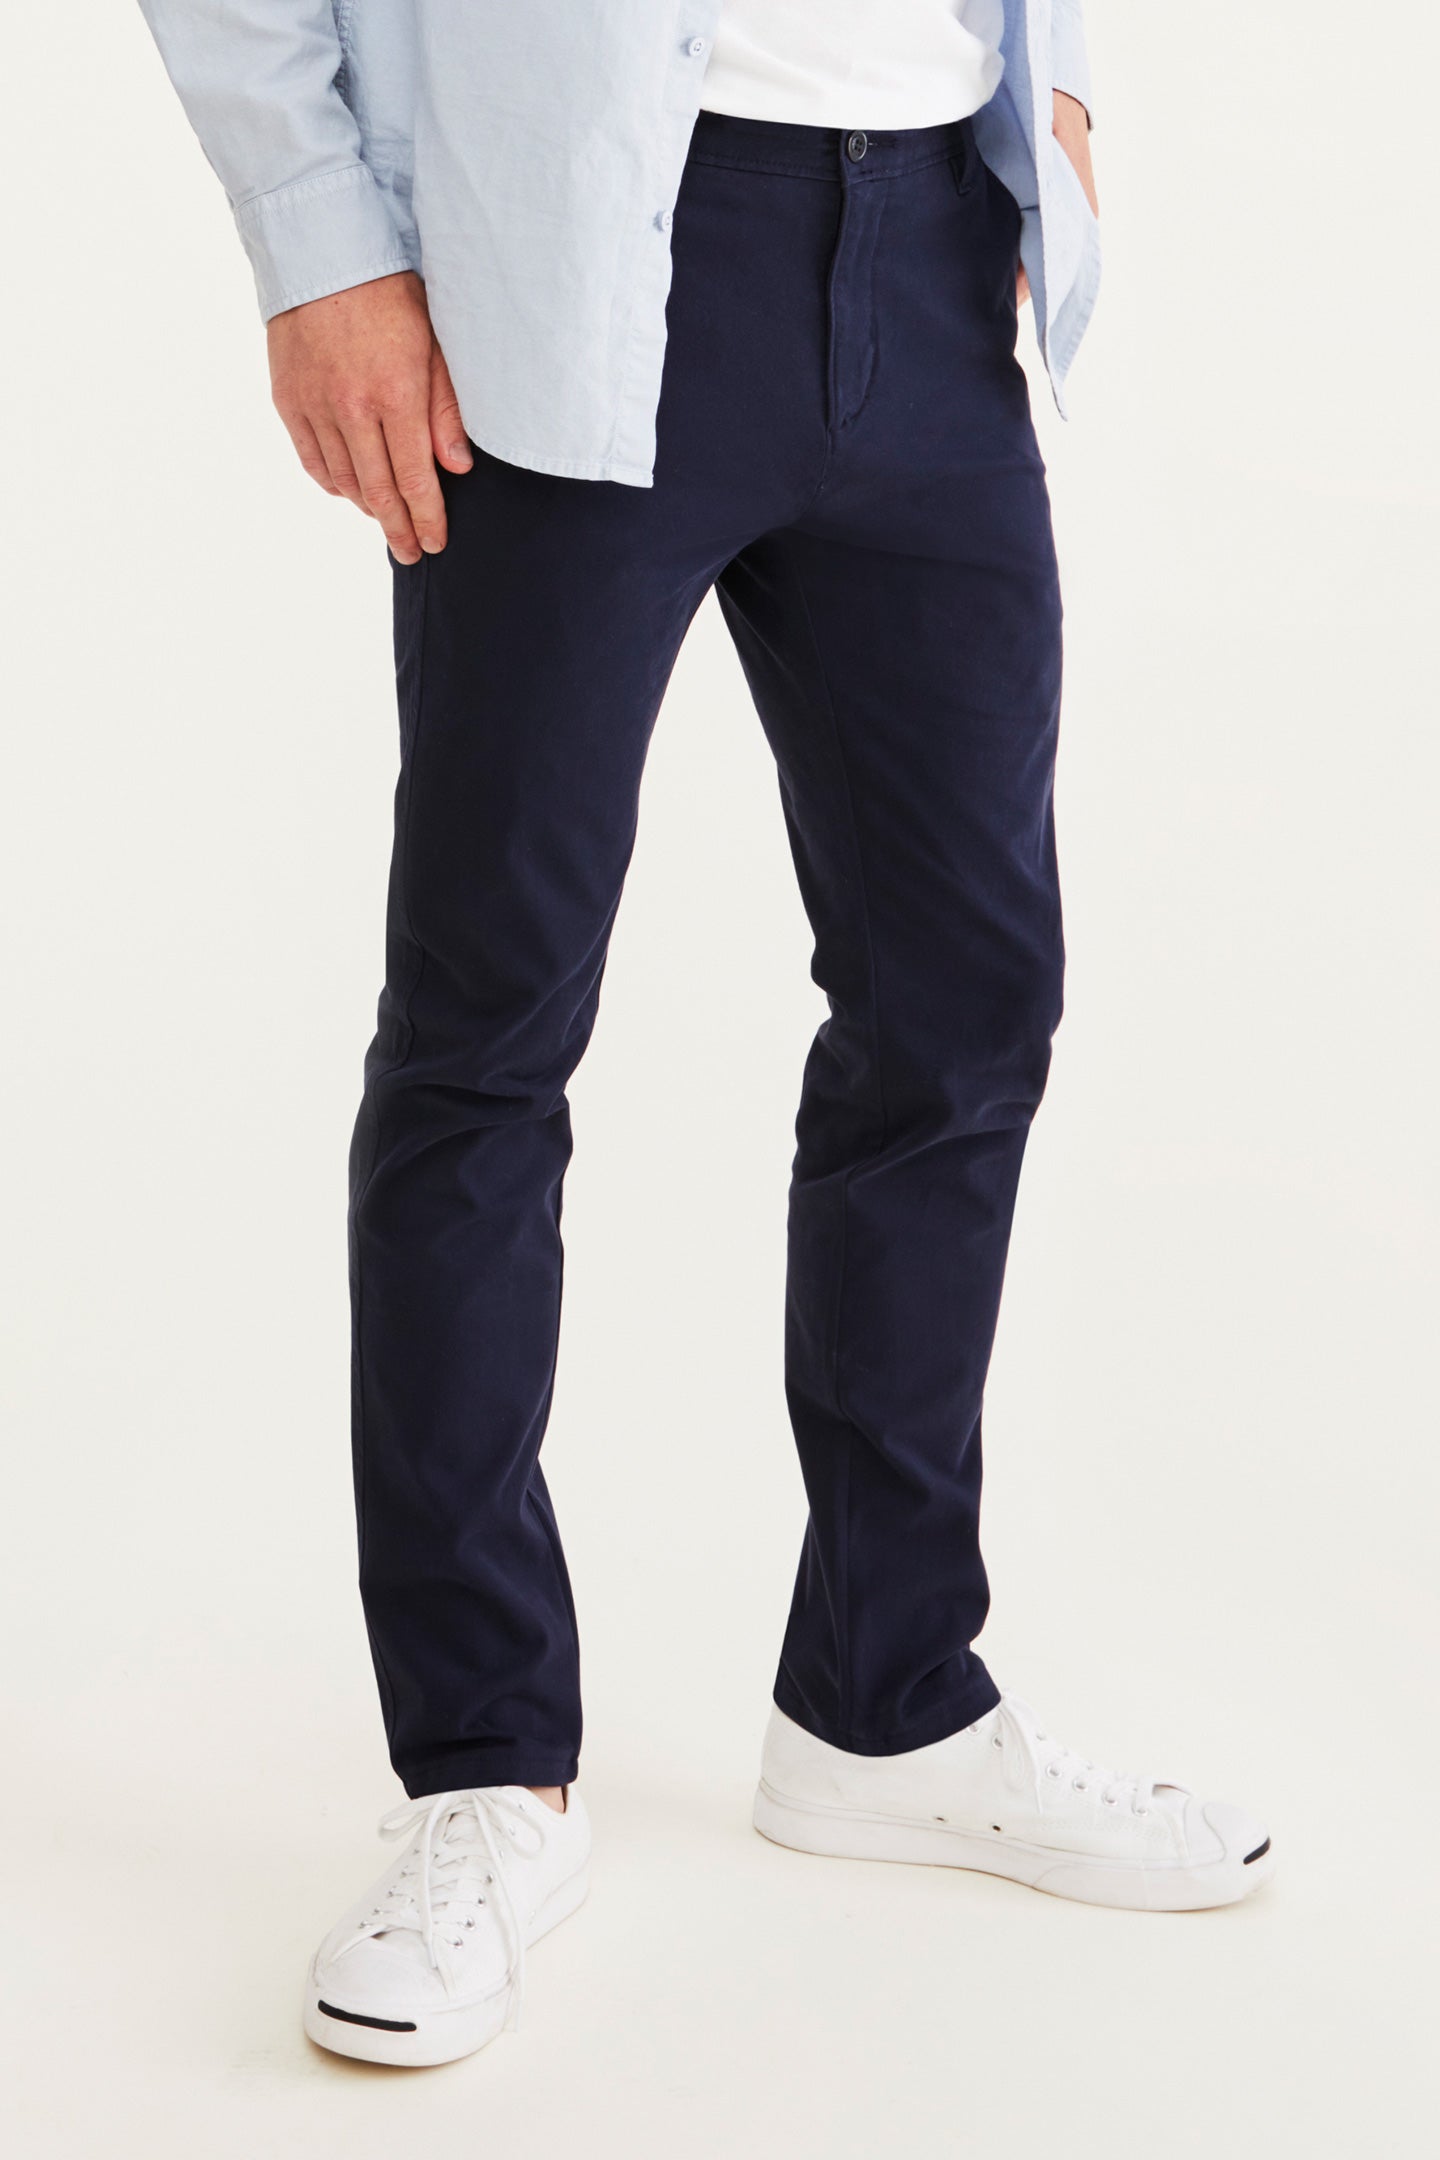 Men's Khaki Pants, Chinos, Trousers & Dress Pants | Dockers® US